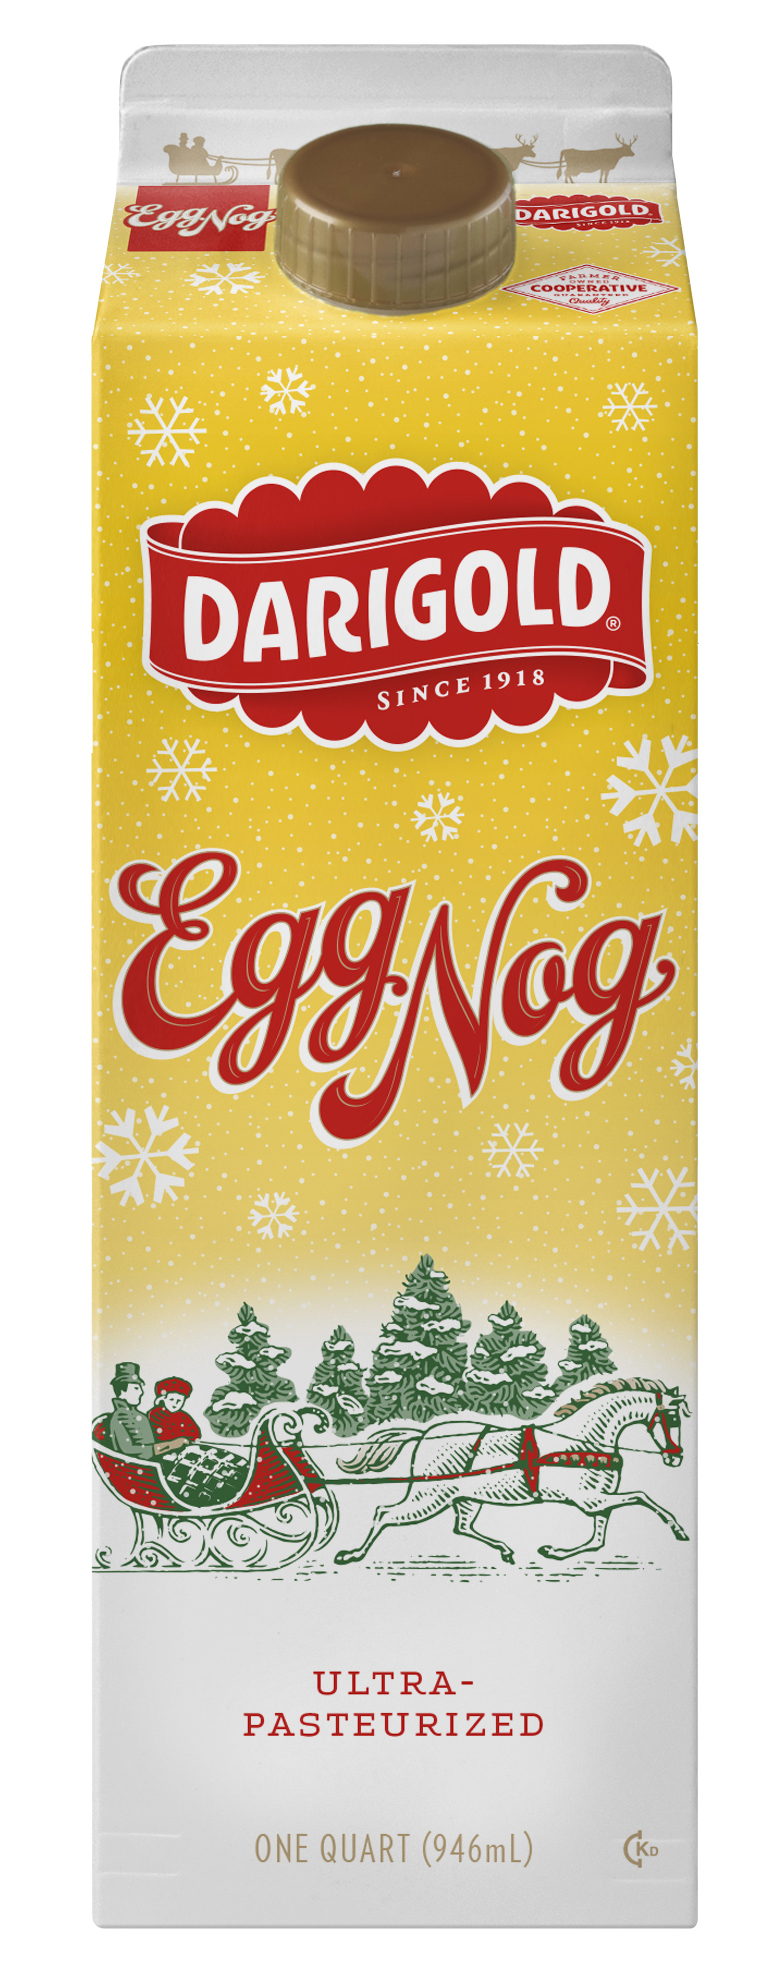 egg nog original quart darigold